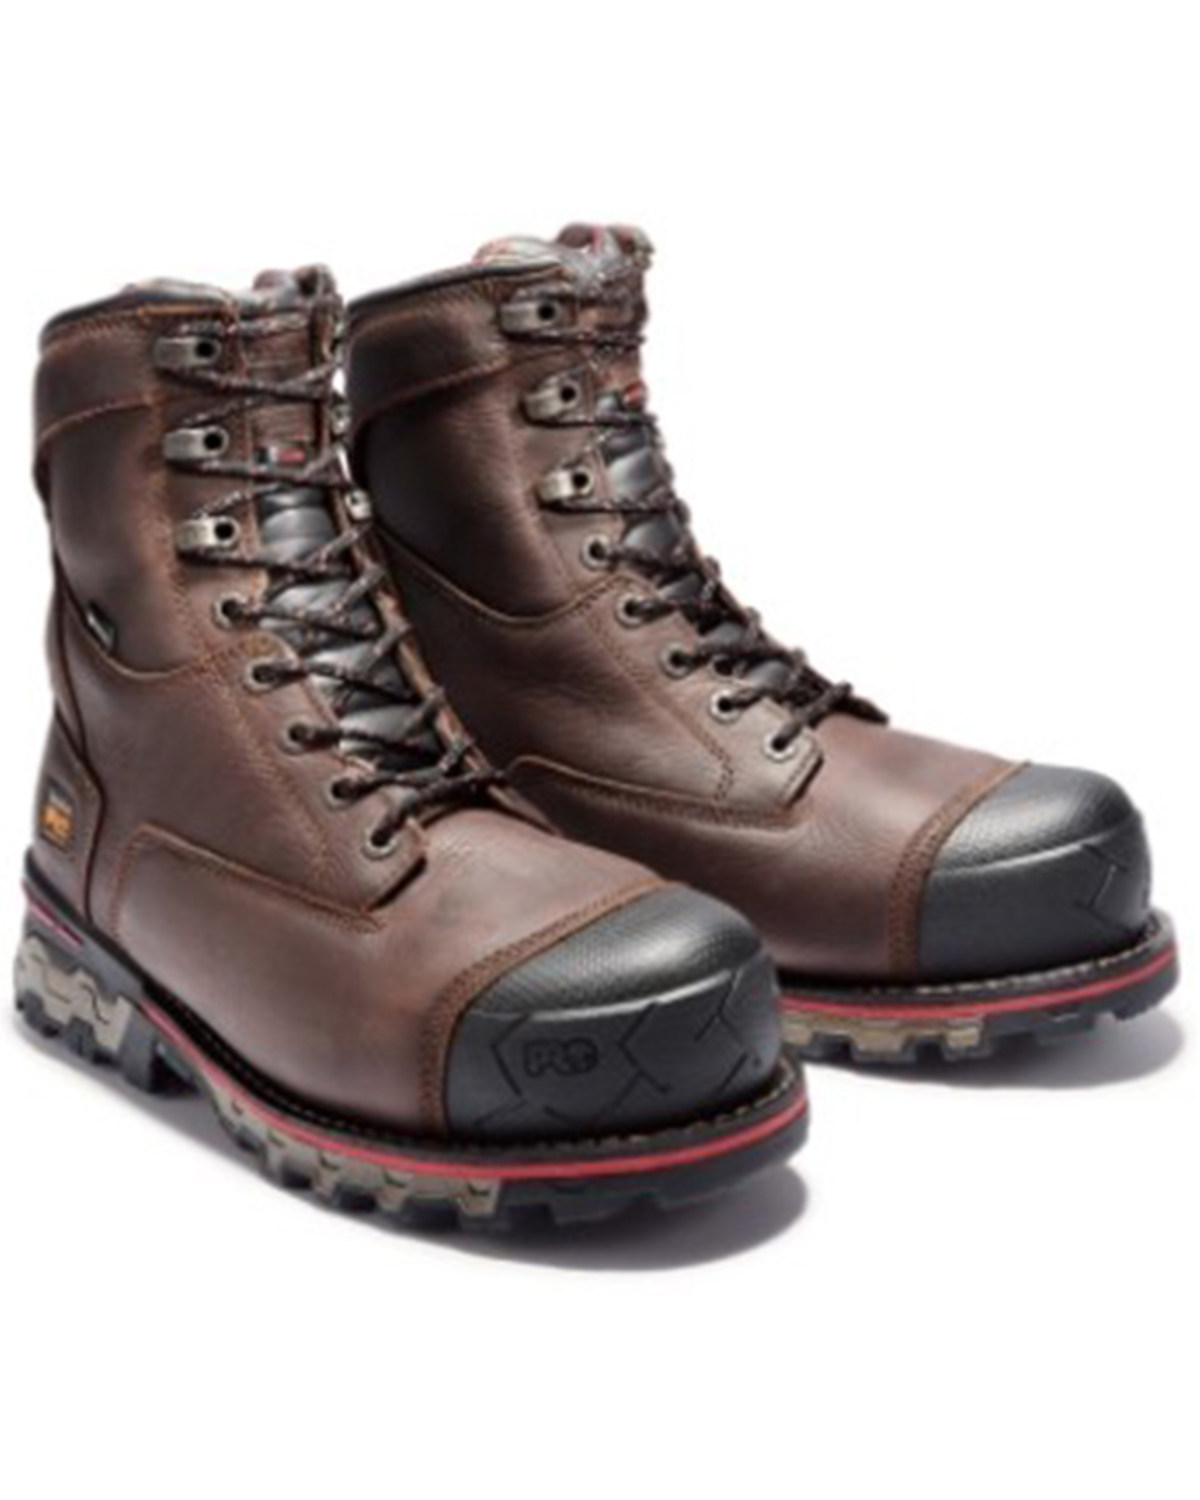 Timberland PRO Men's Boondock Composite Toe Work Boots